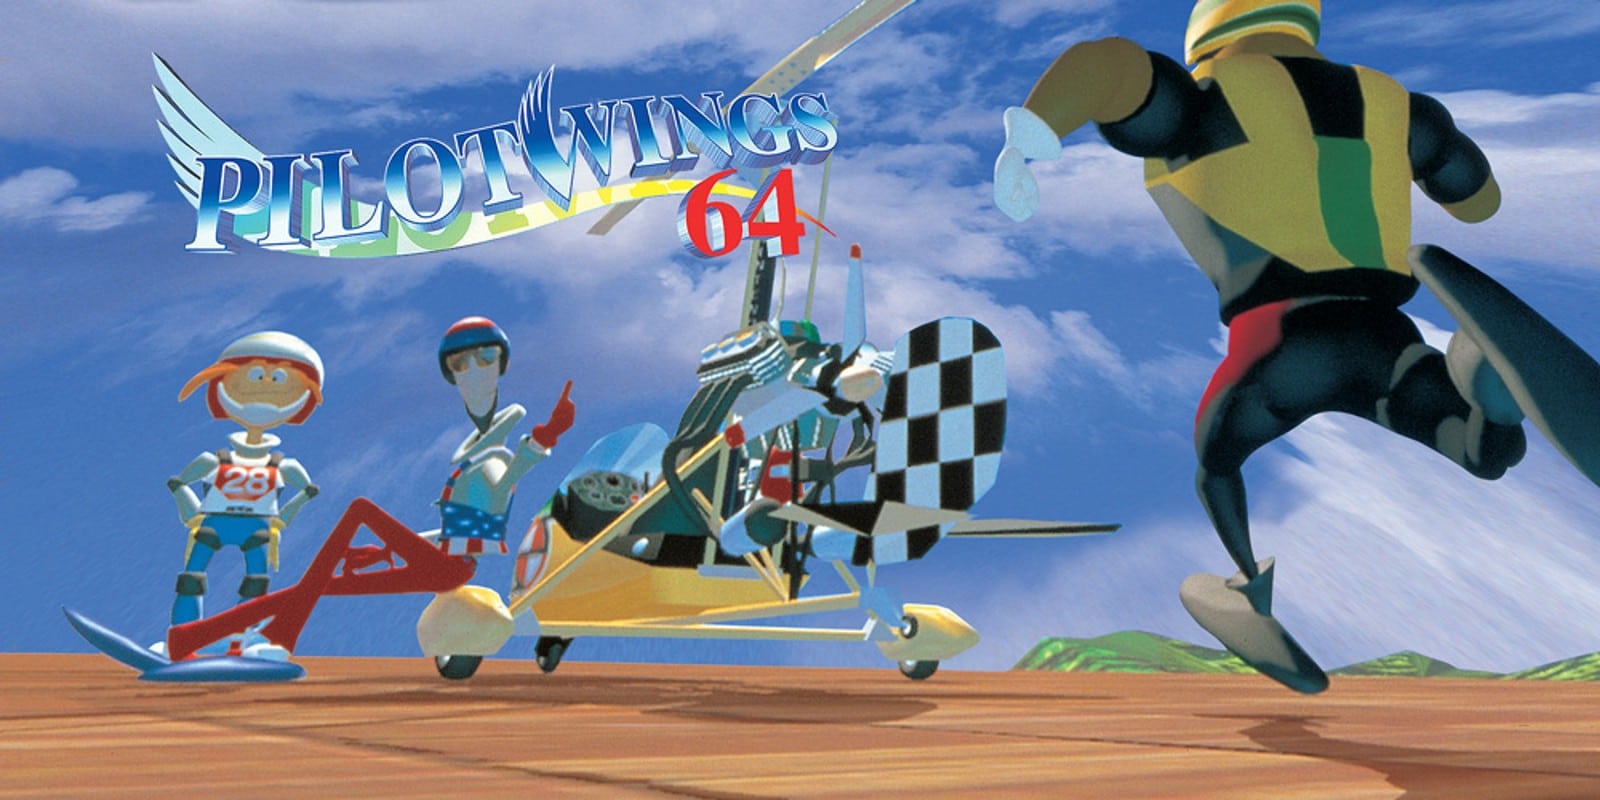 Pilotwings 64 llegará a Nintendo Switch